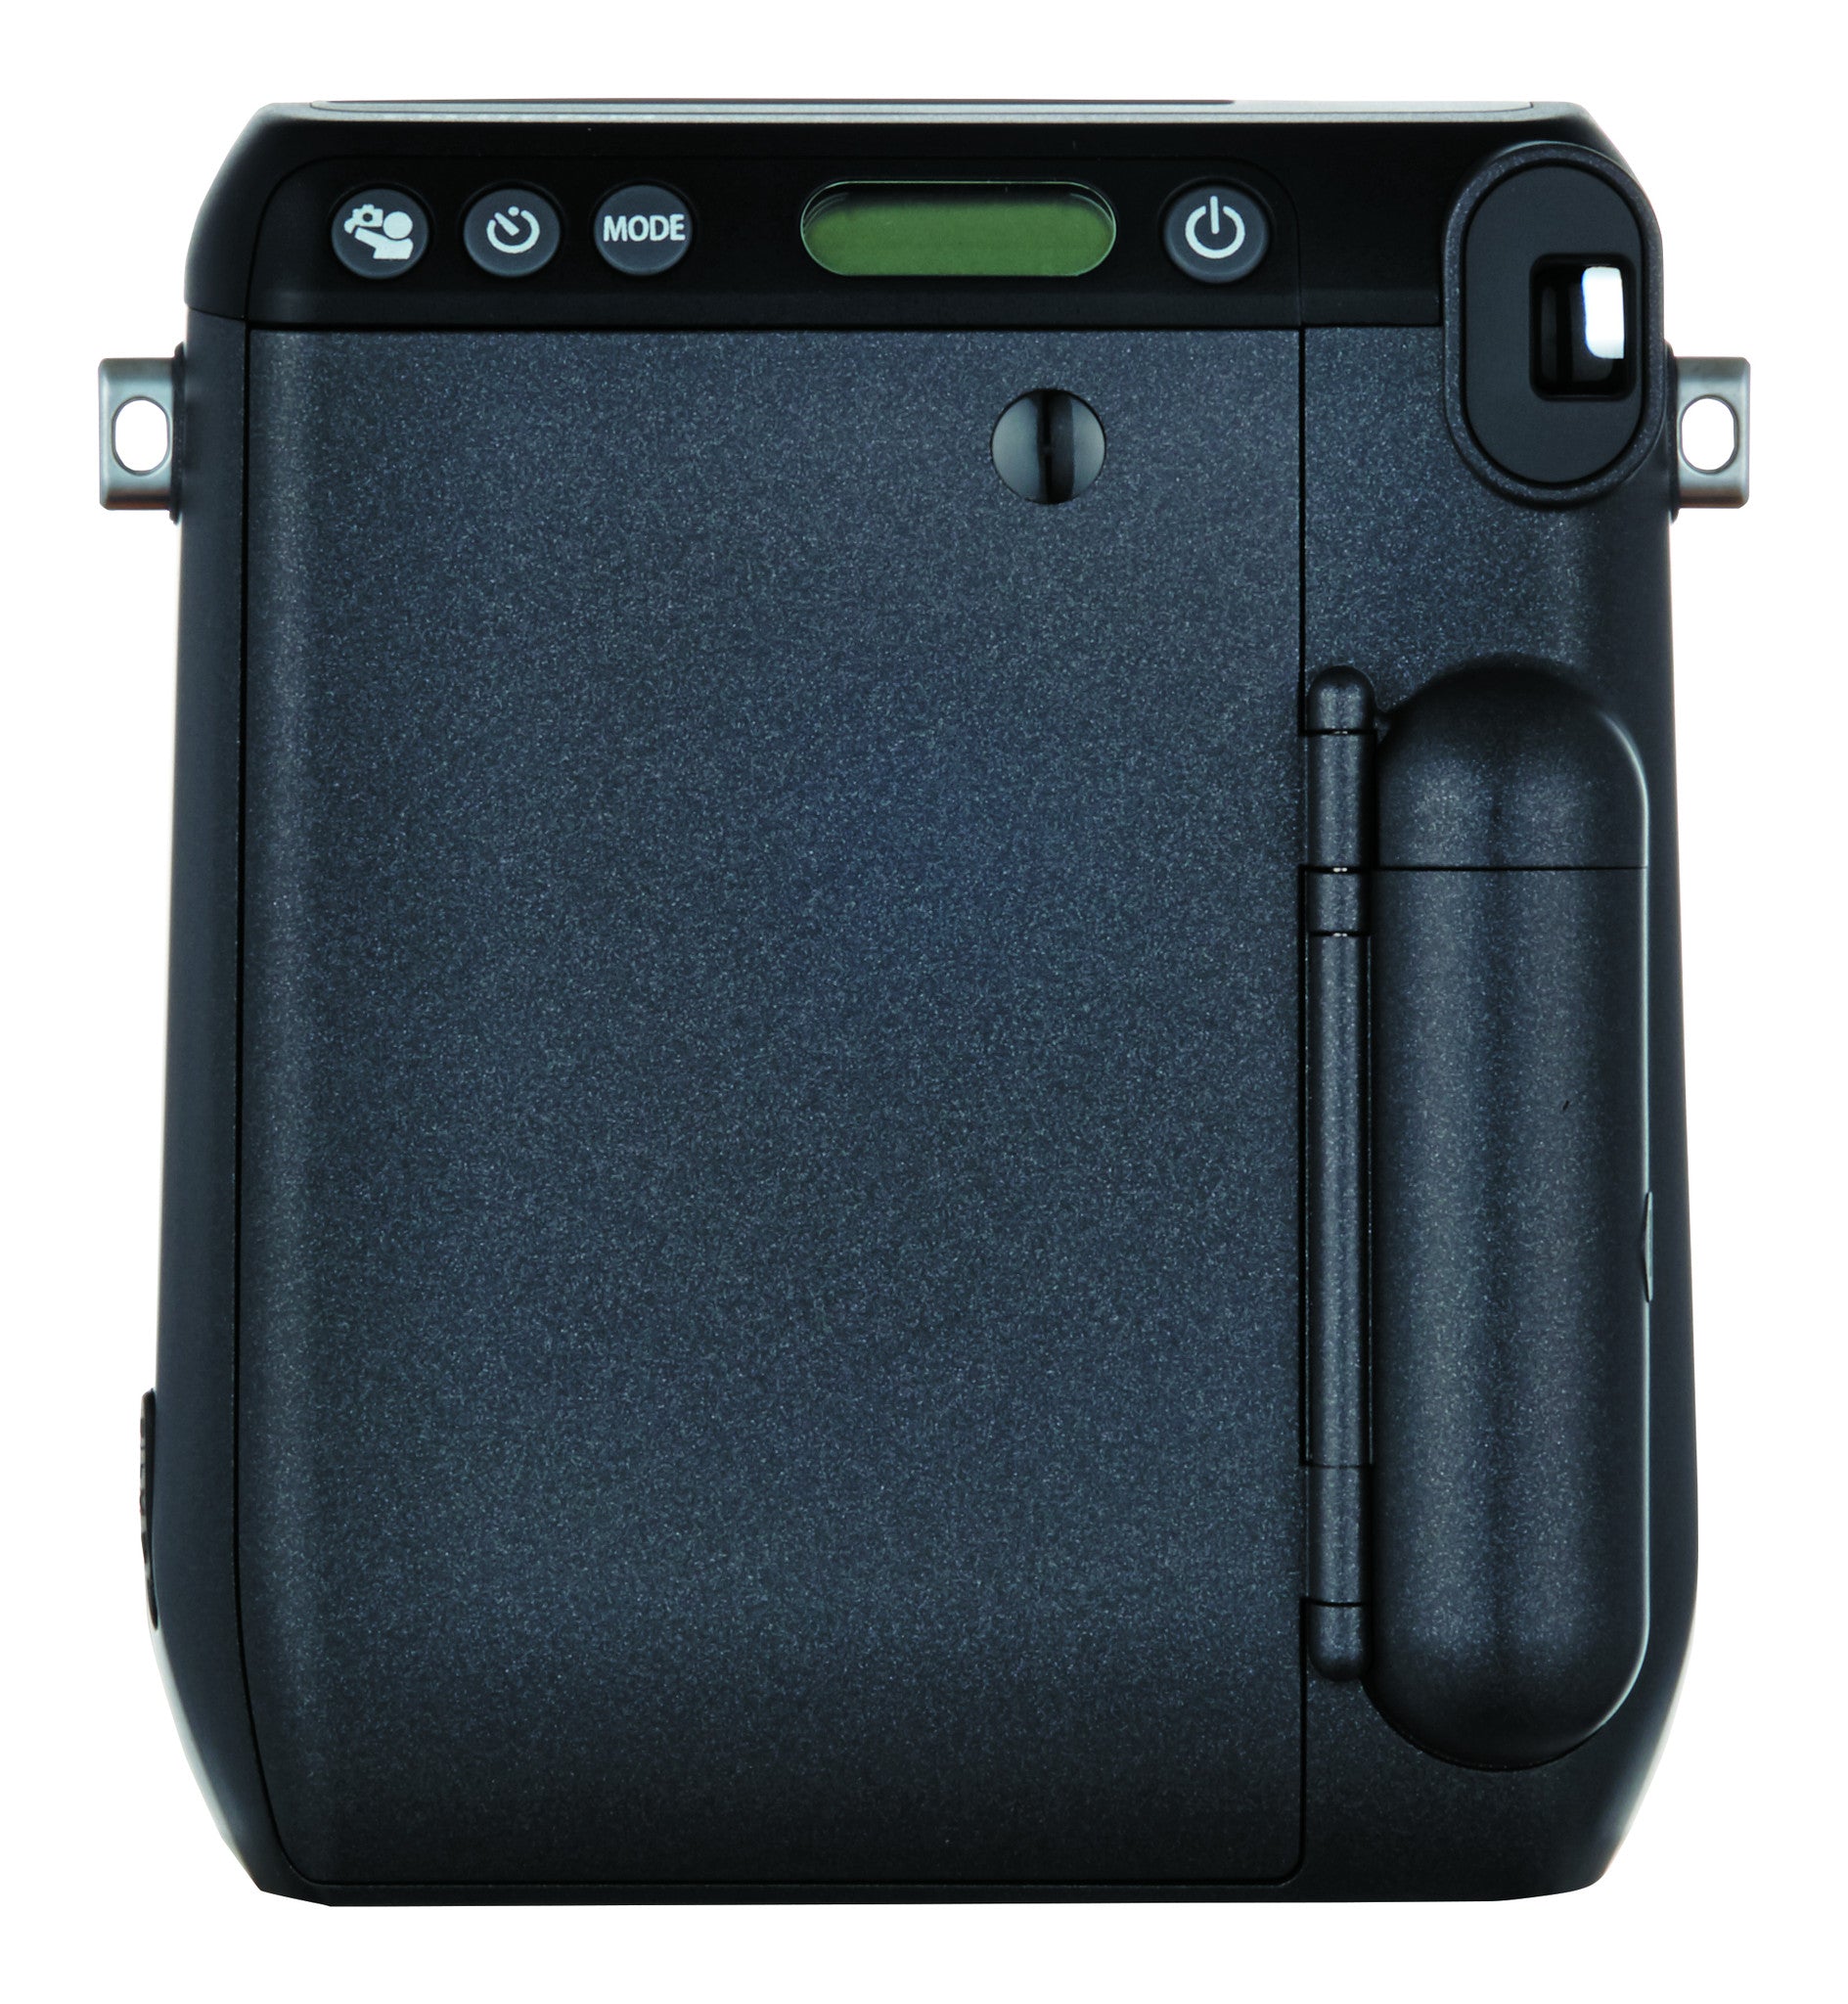 Fujifilm INSTAX Mini 70 Instant Film Camera (Midnight Black), camera film cameras, Fujifilm - Pictureline  - 2